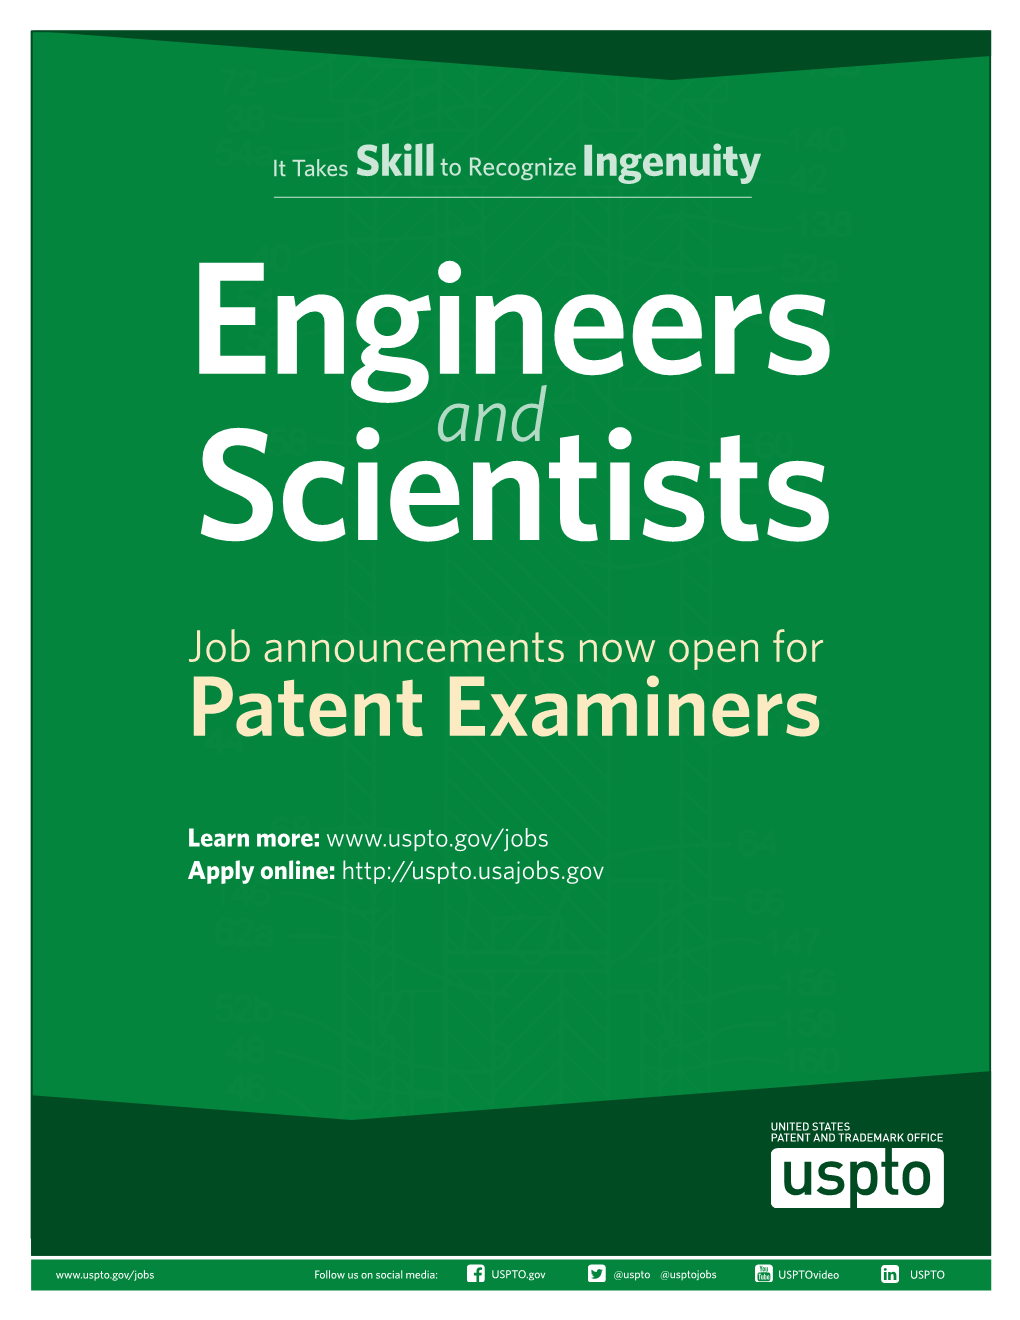 Patent Examiners